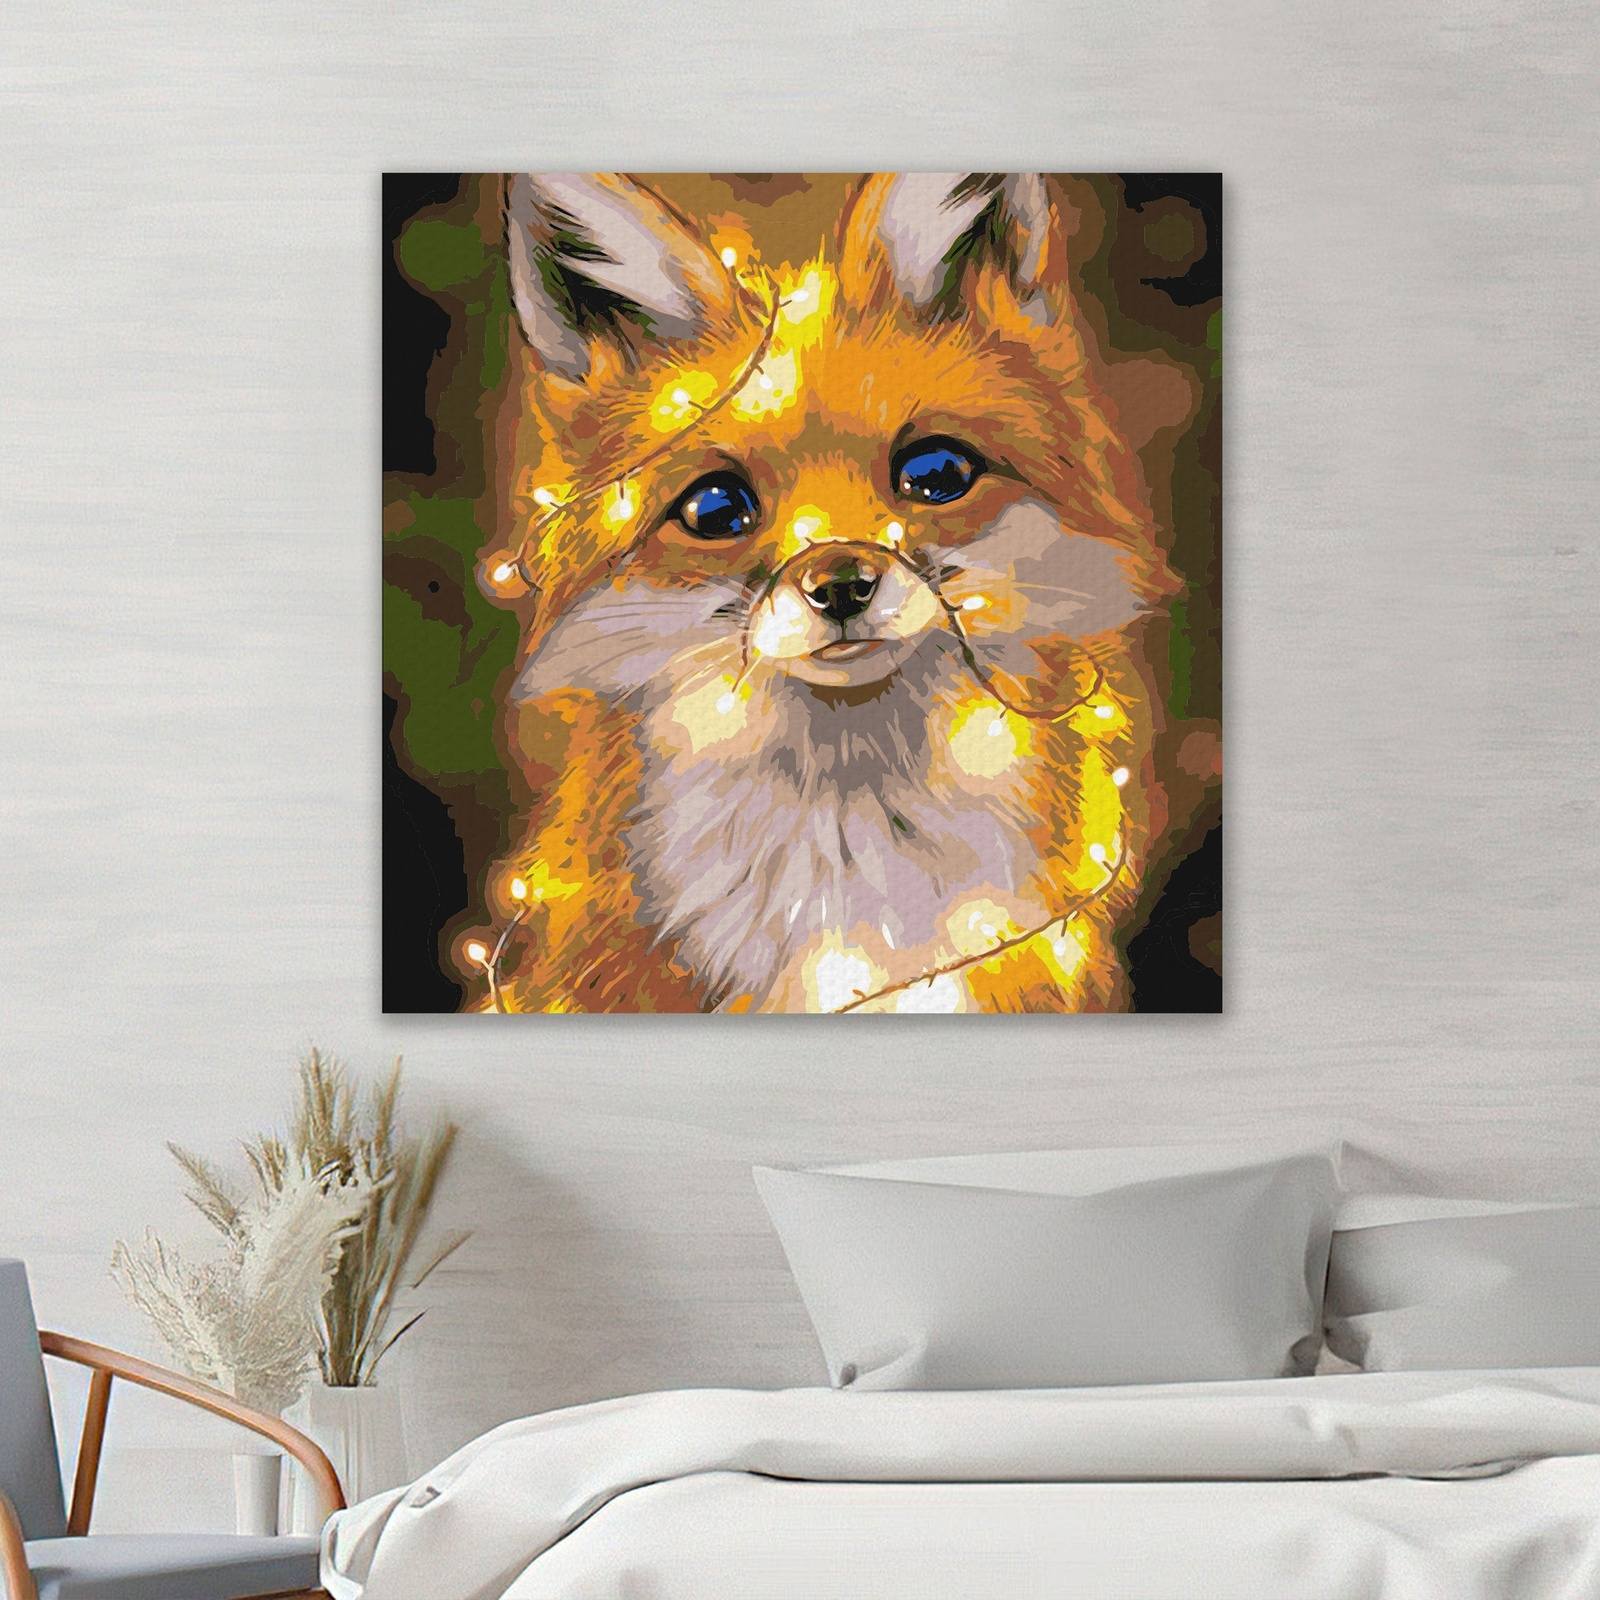 Fox In Lights (Pc0586)